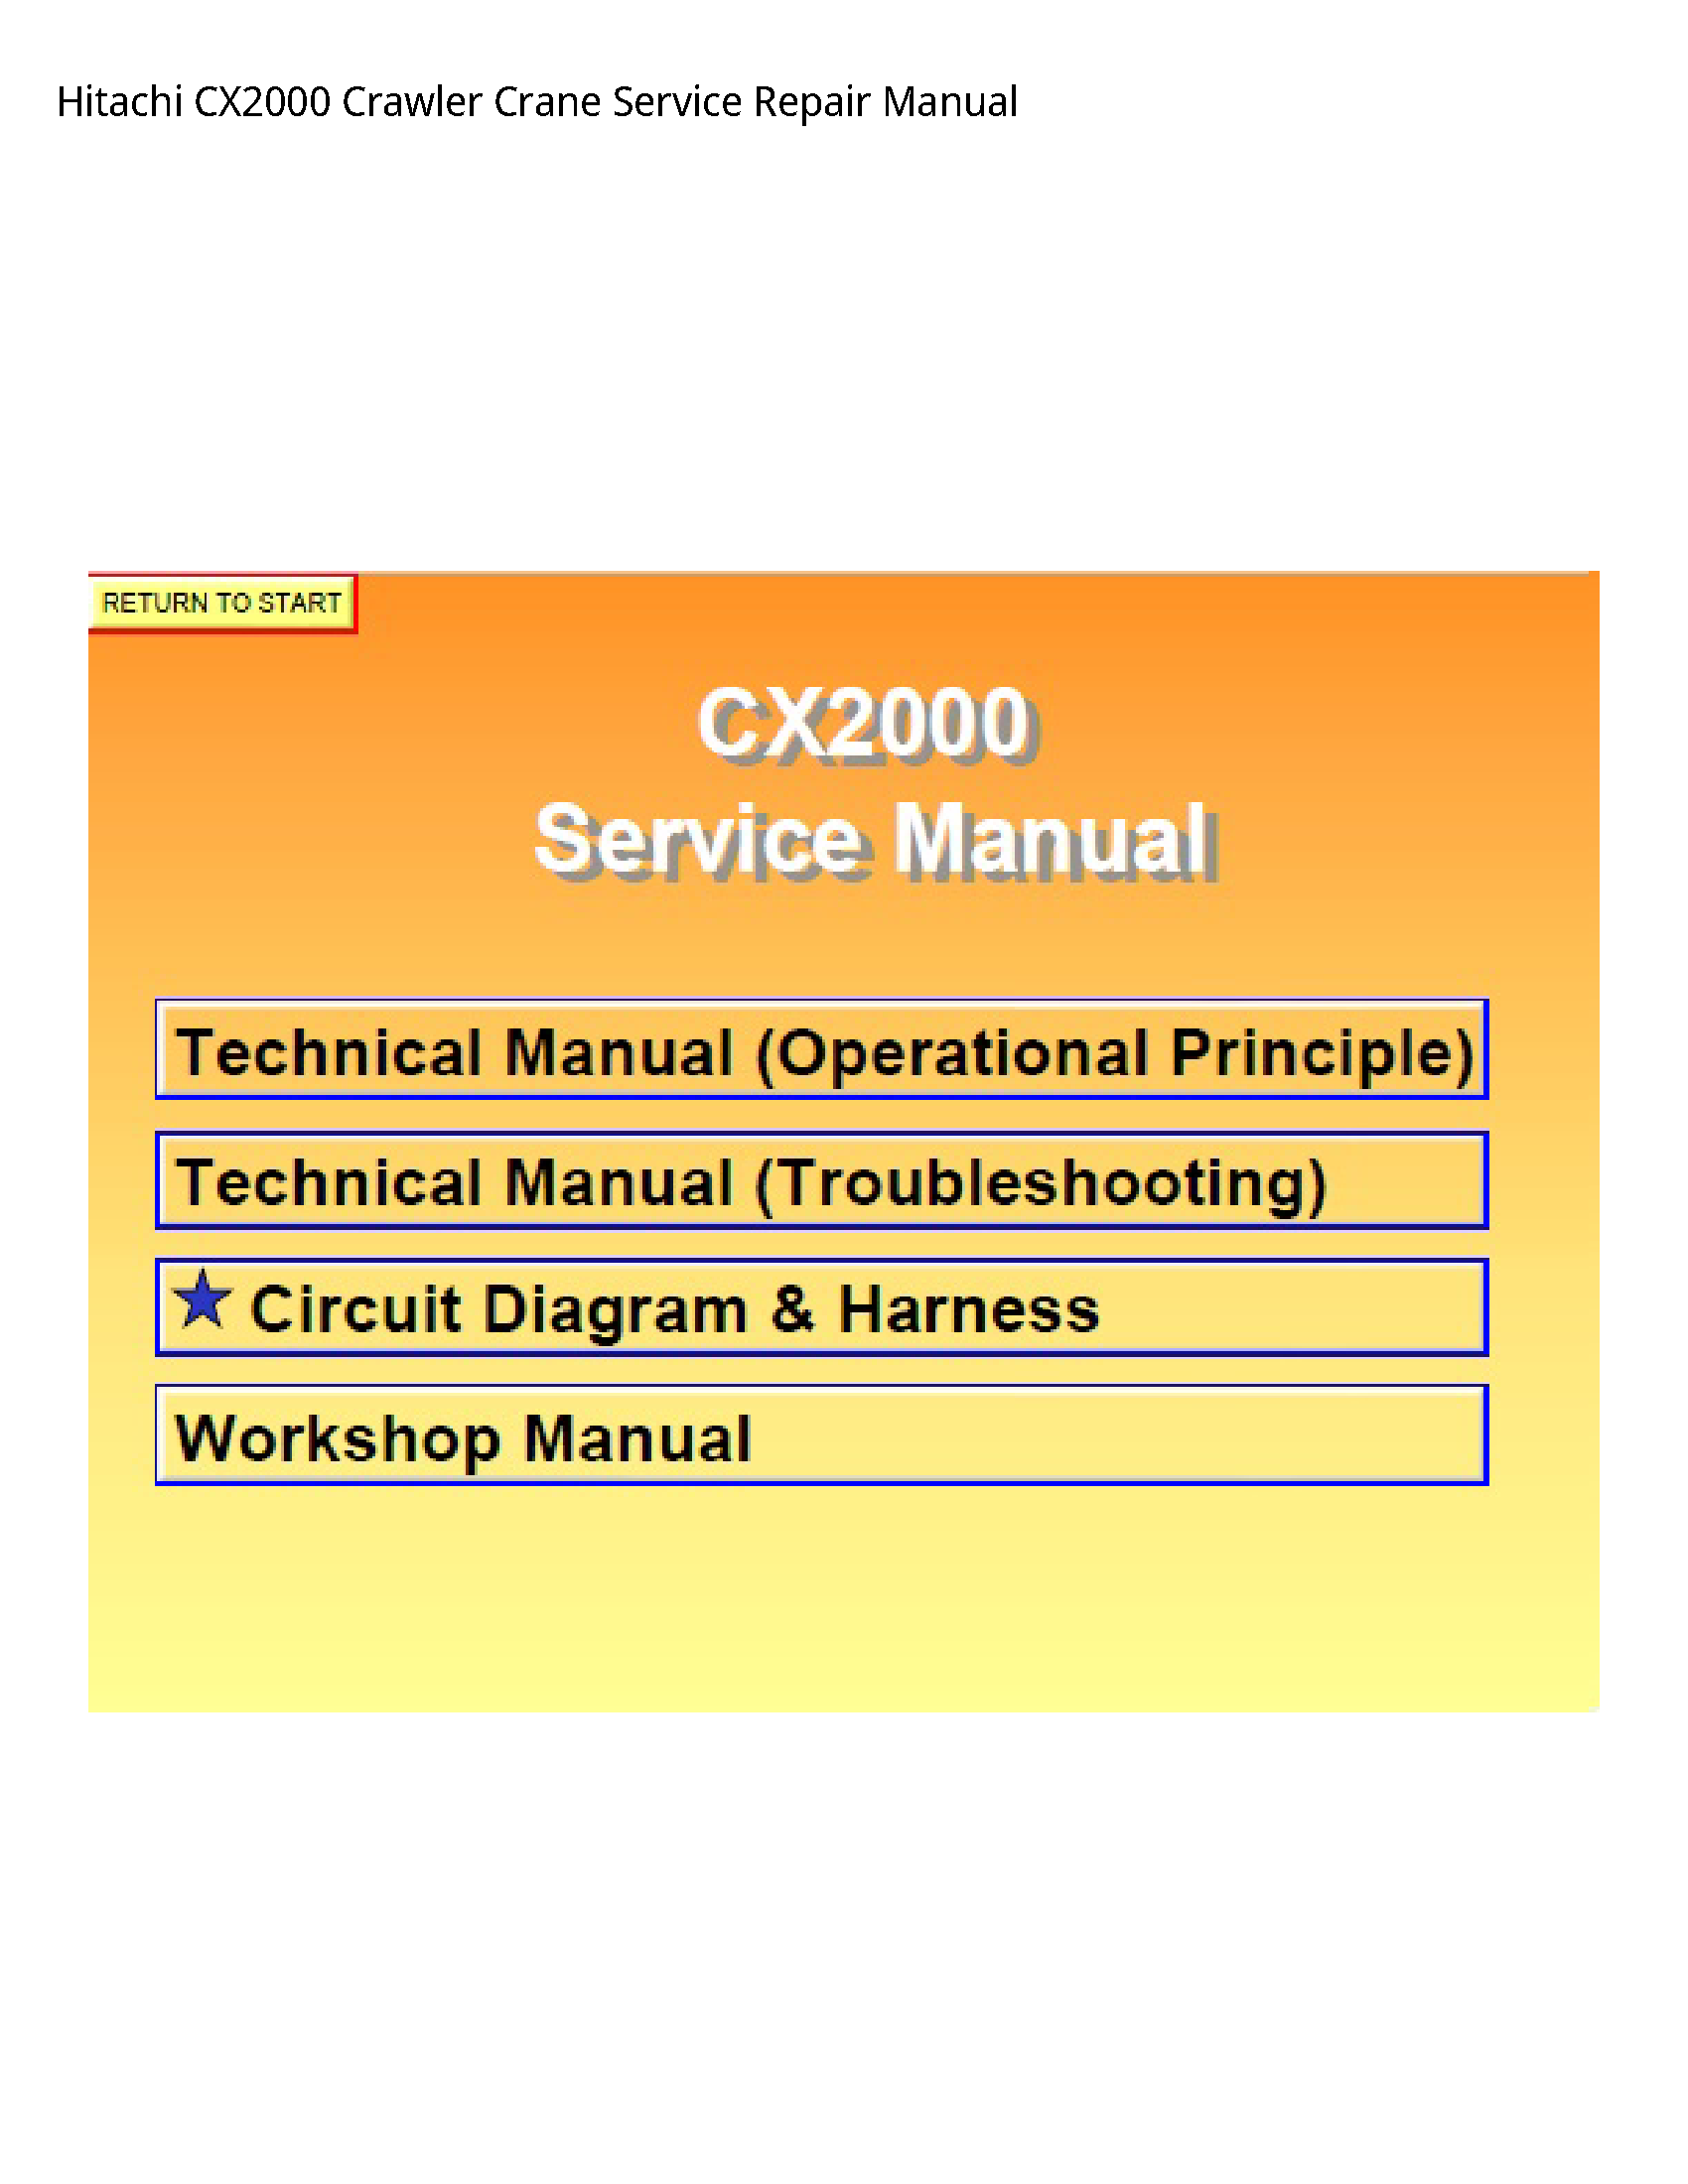 Hitachi CX2000 Crawler Crane manual